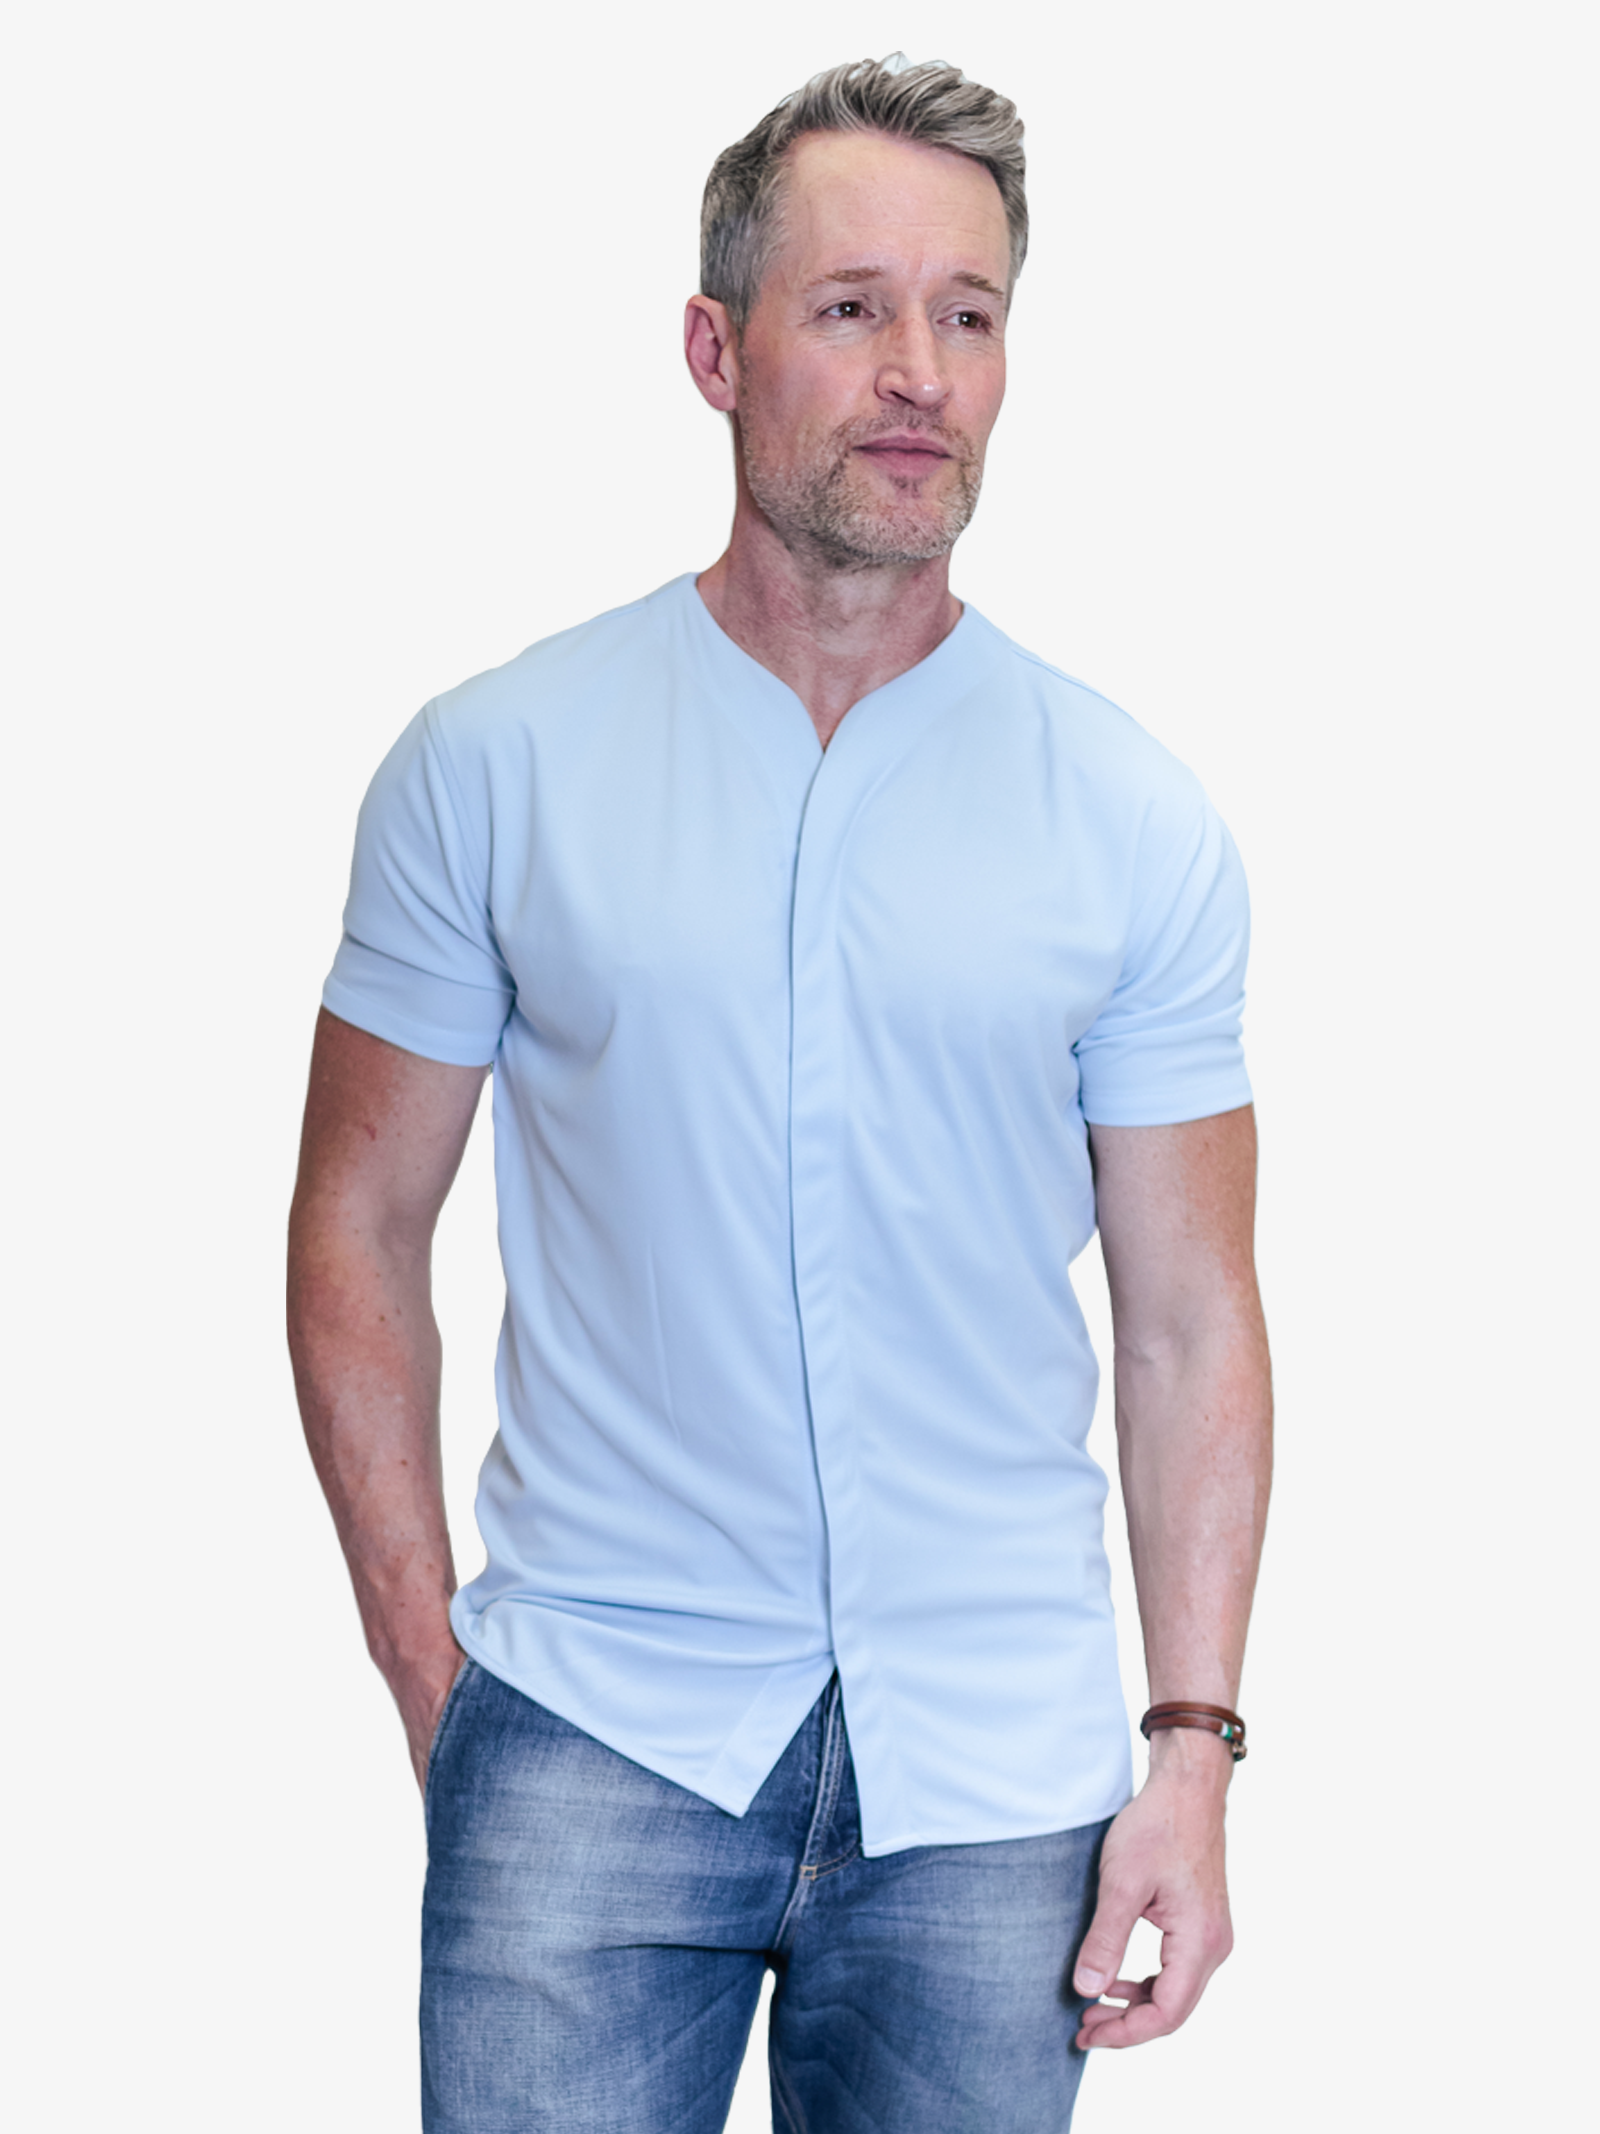  YONGHS Men's Short Sleeve Turn-down Collar Button